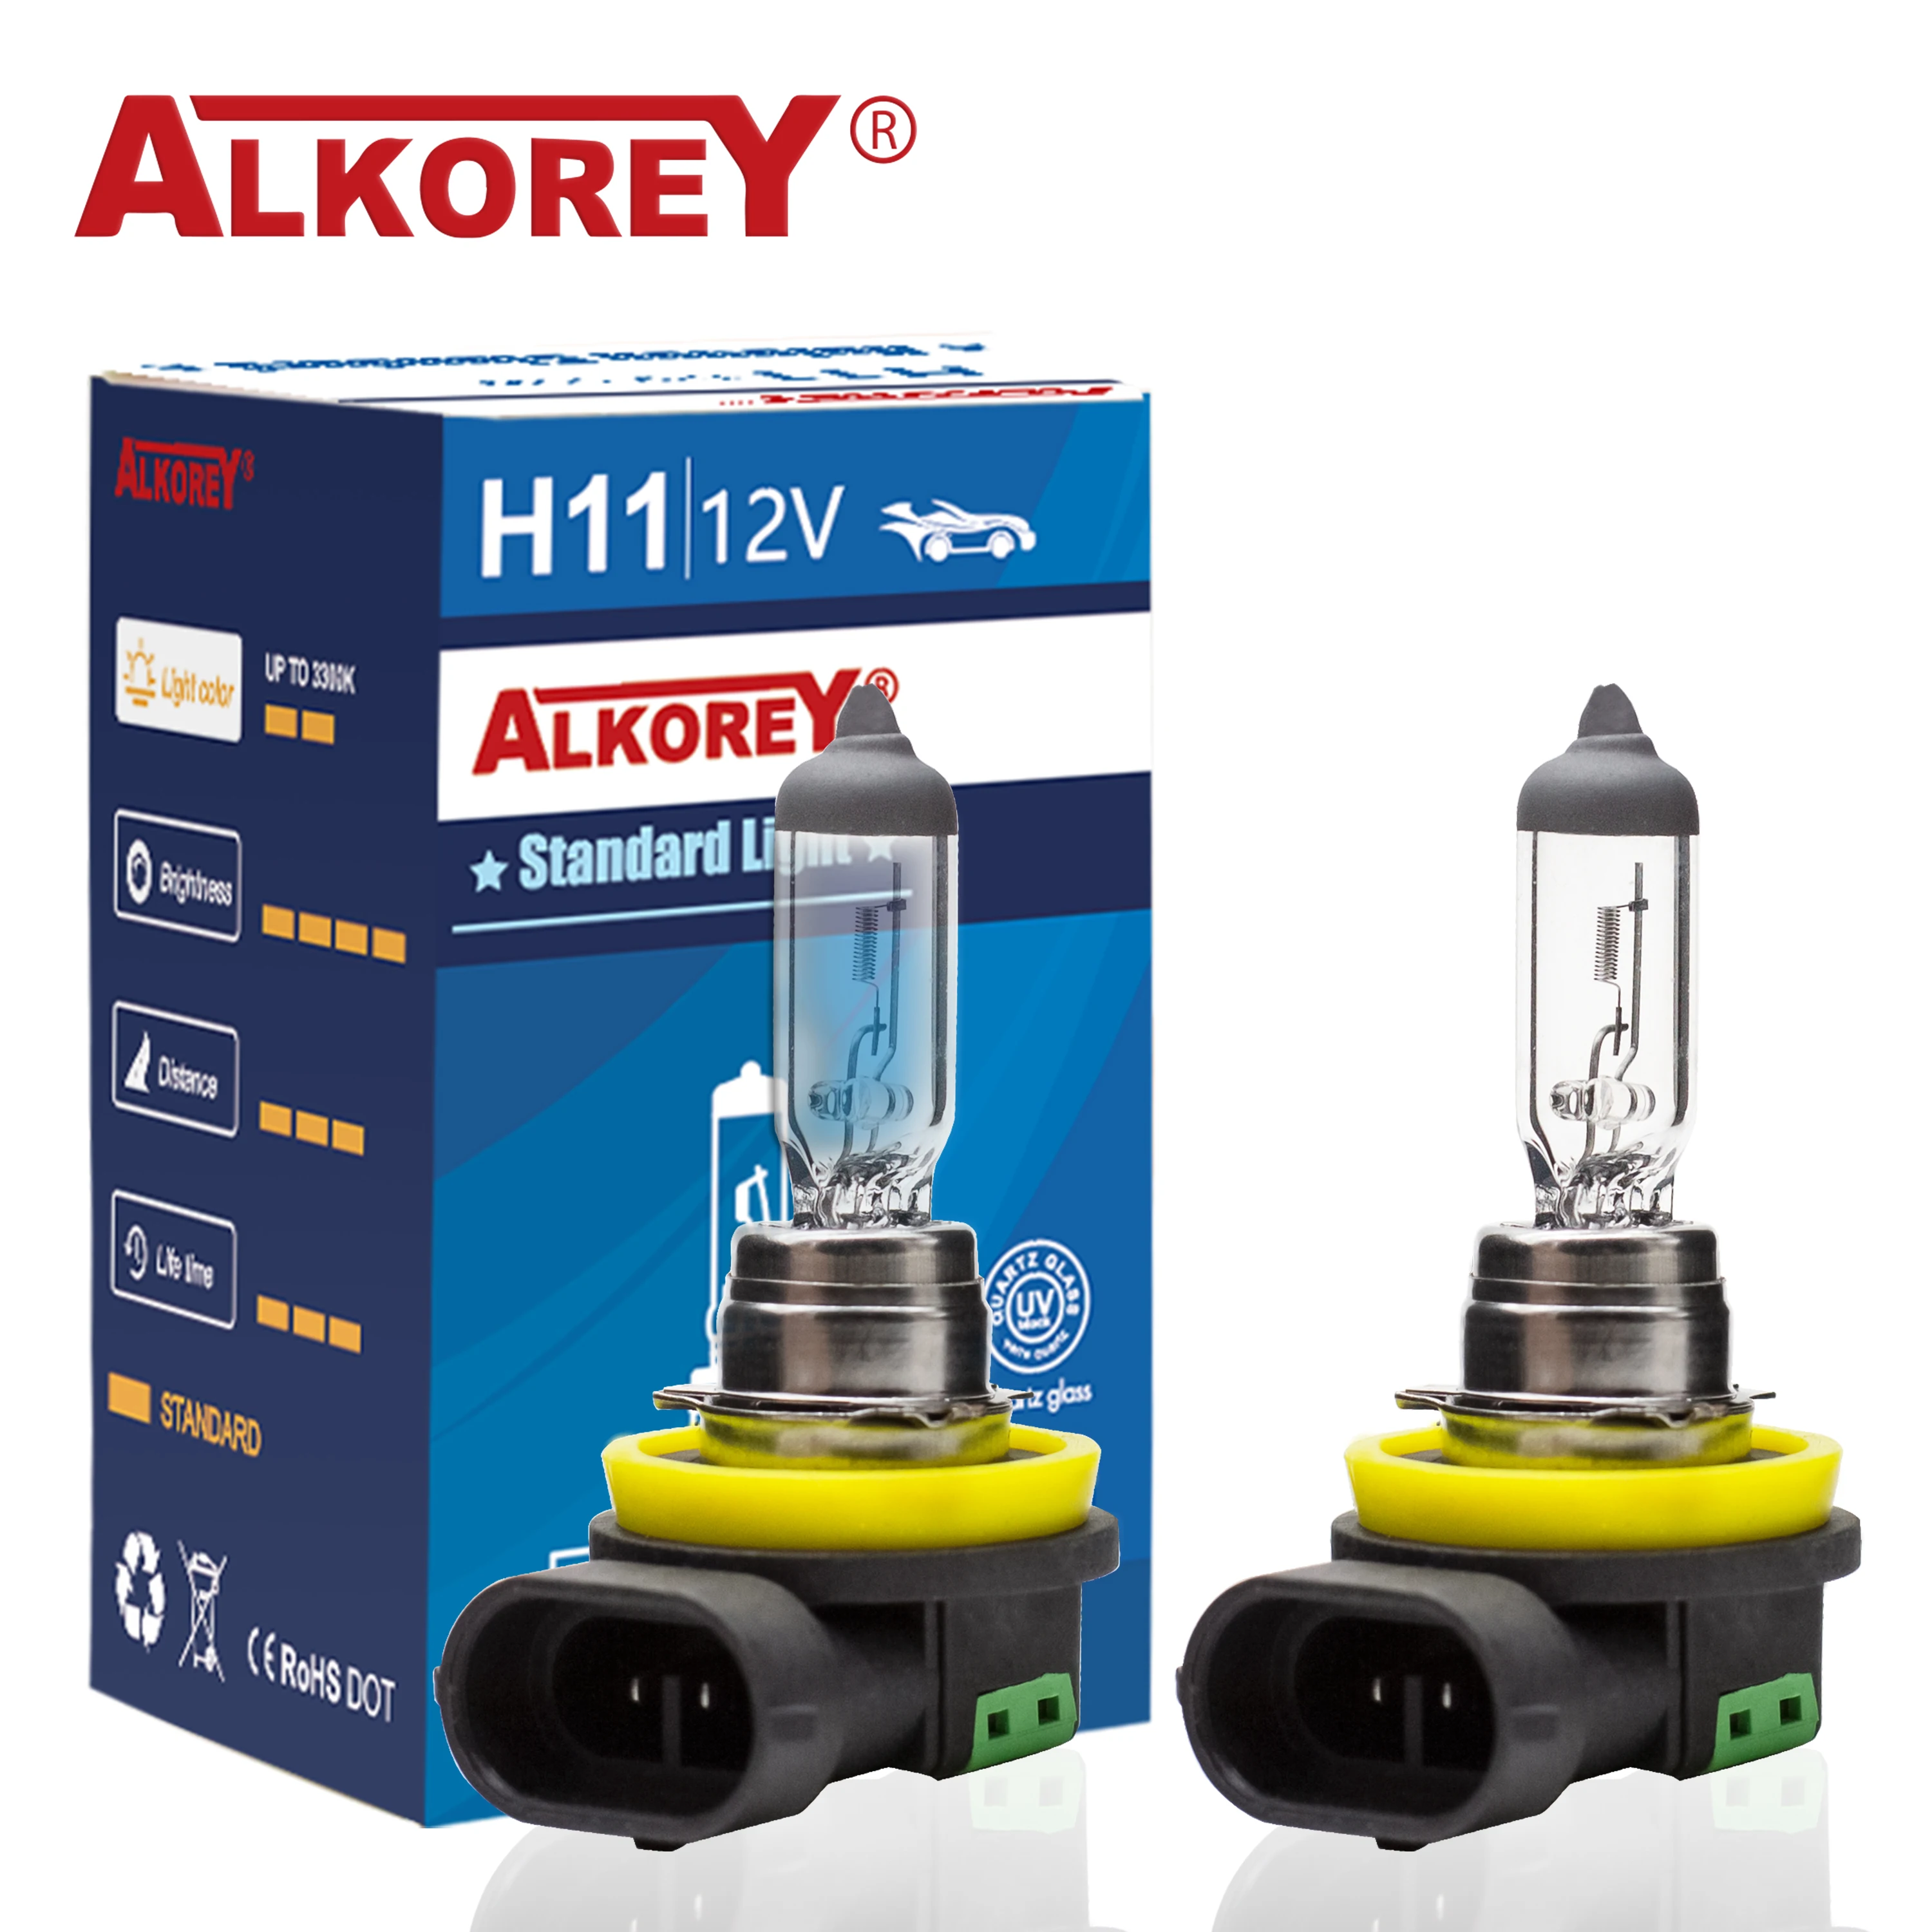 

Alkorey 2PCS H11 12V 55W Clear Auto Headlight Bulbs Warm White 3350K Car Fog Lights Driving Lamp Halogen Lamps